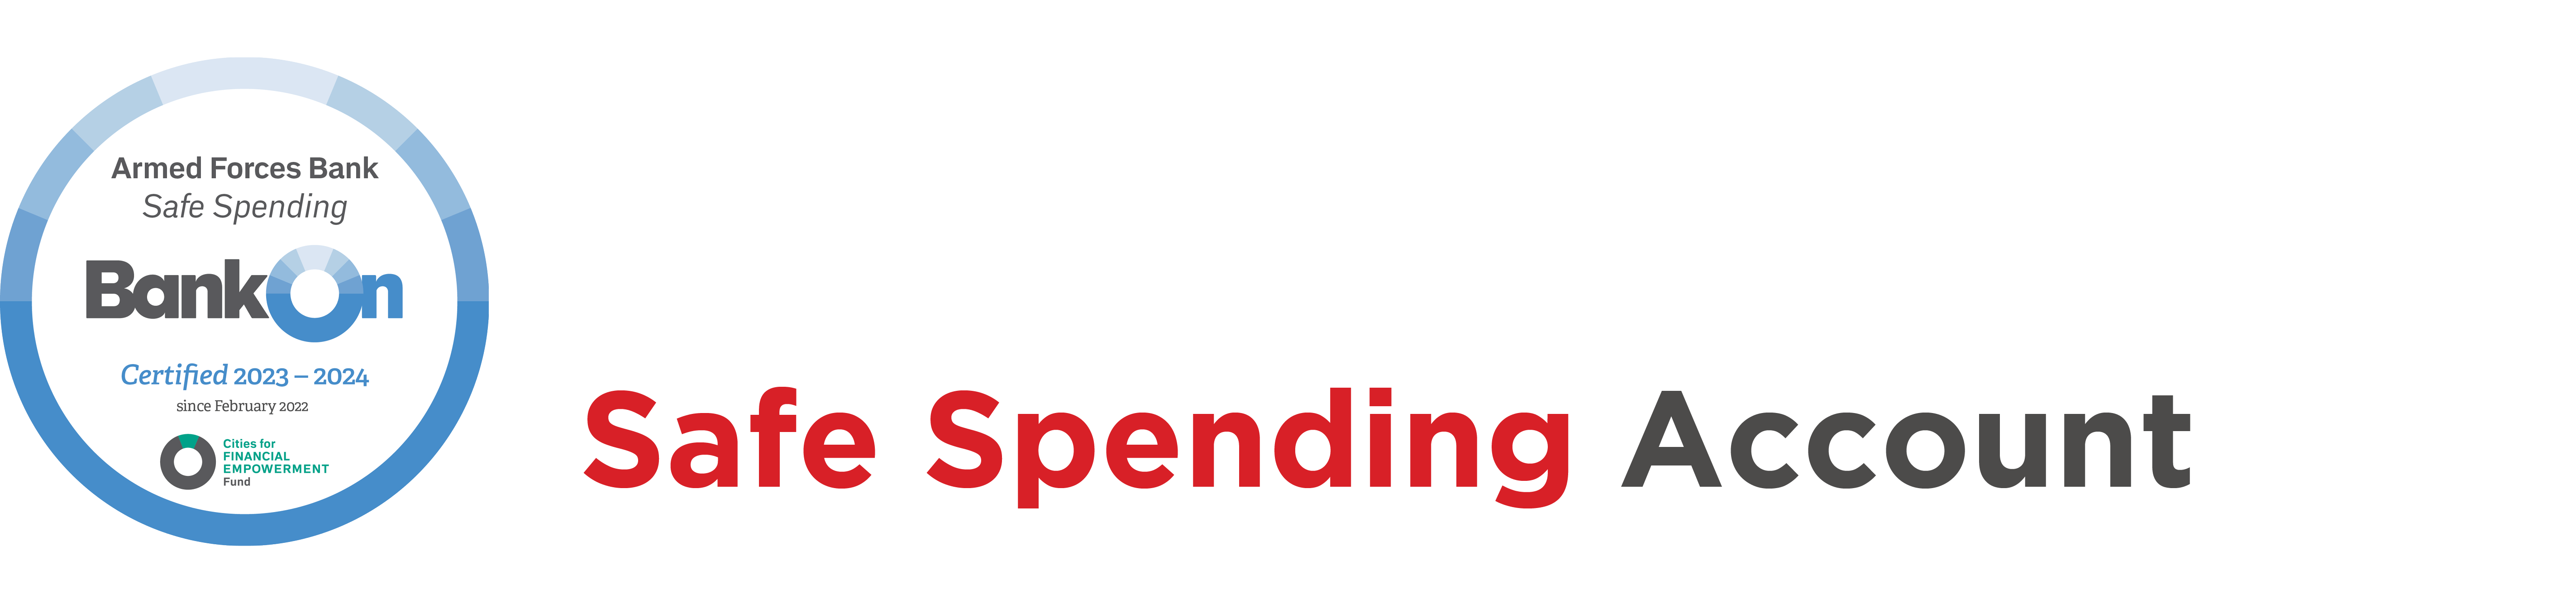 Safe Spending Account logo